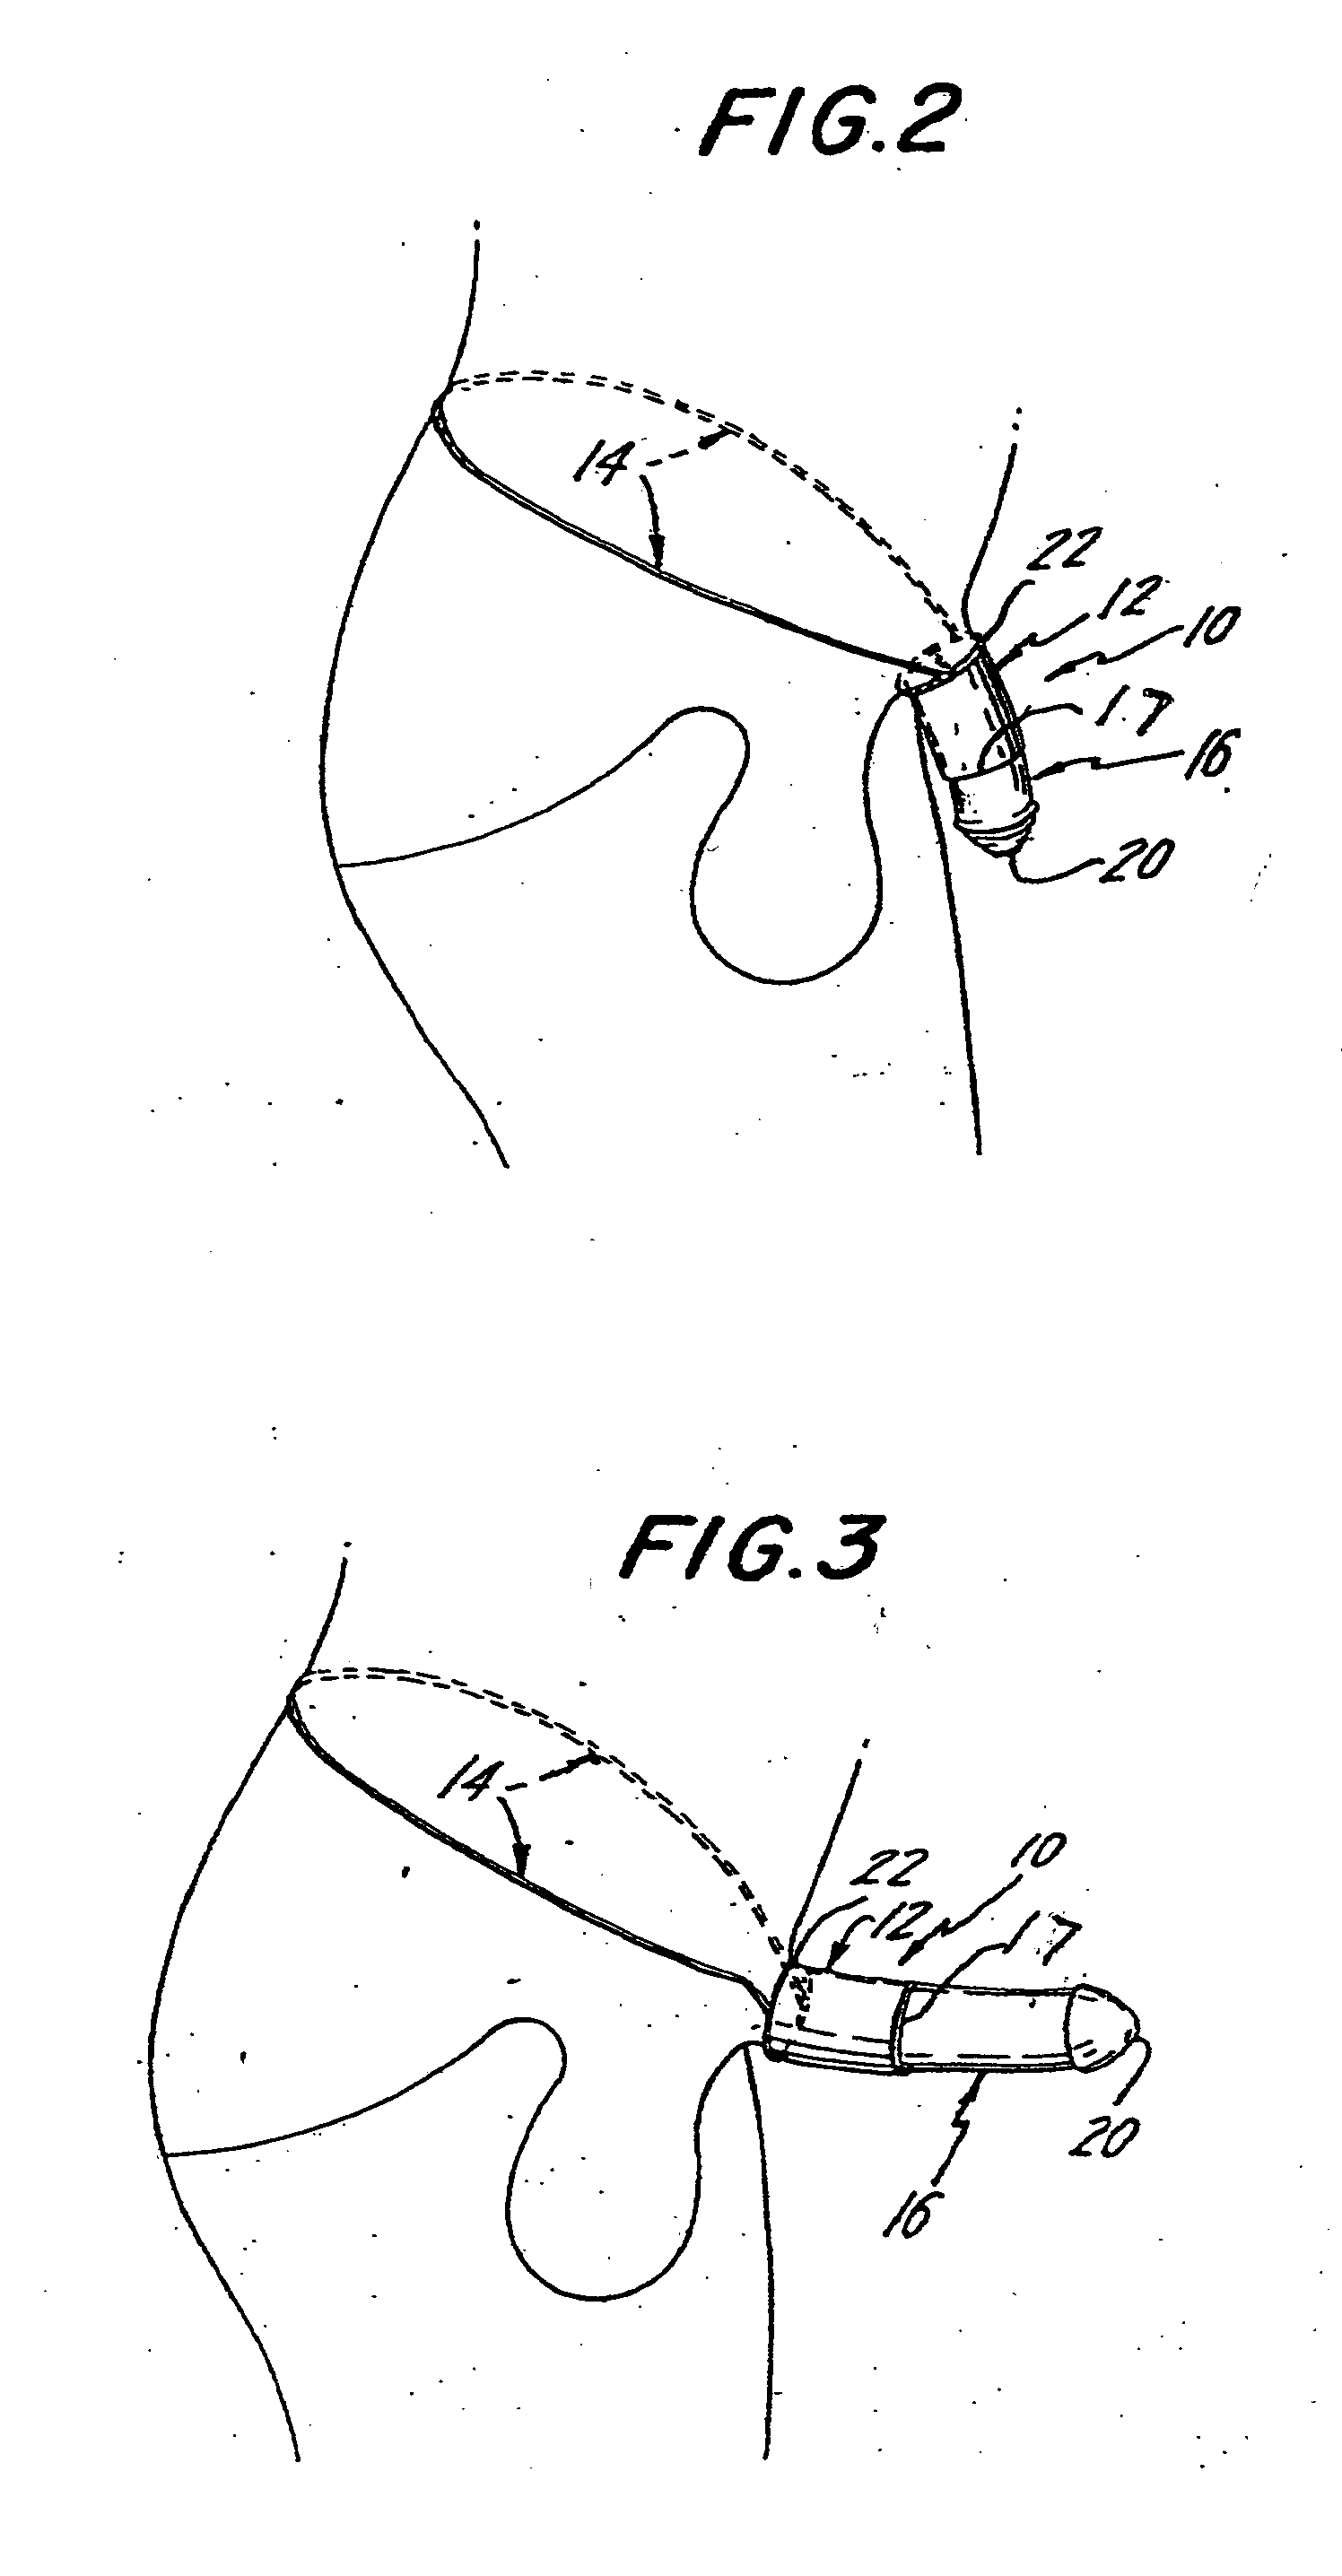 Penile foreskin restraining device and method